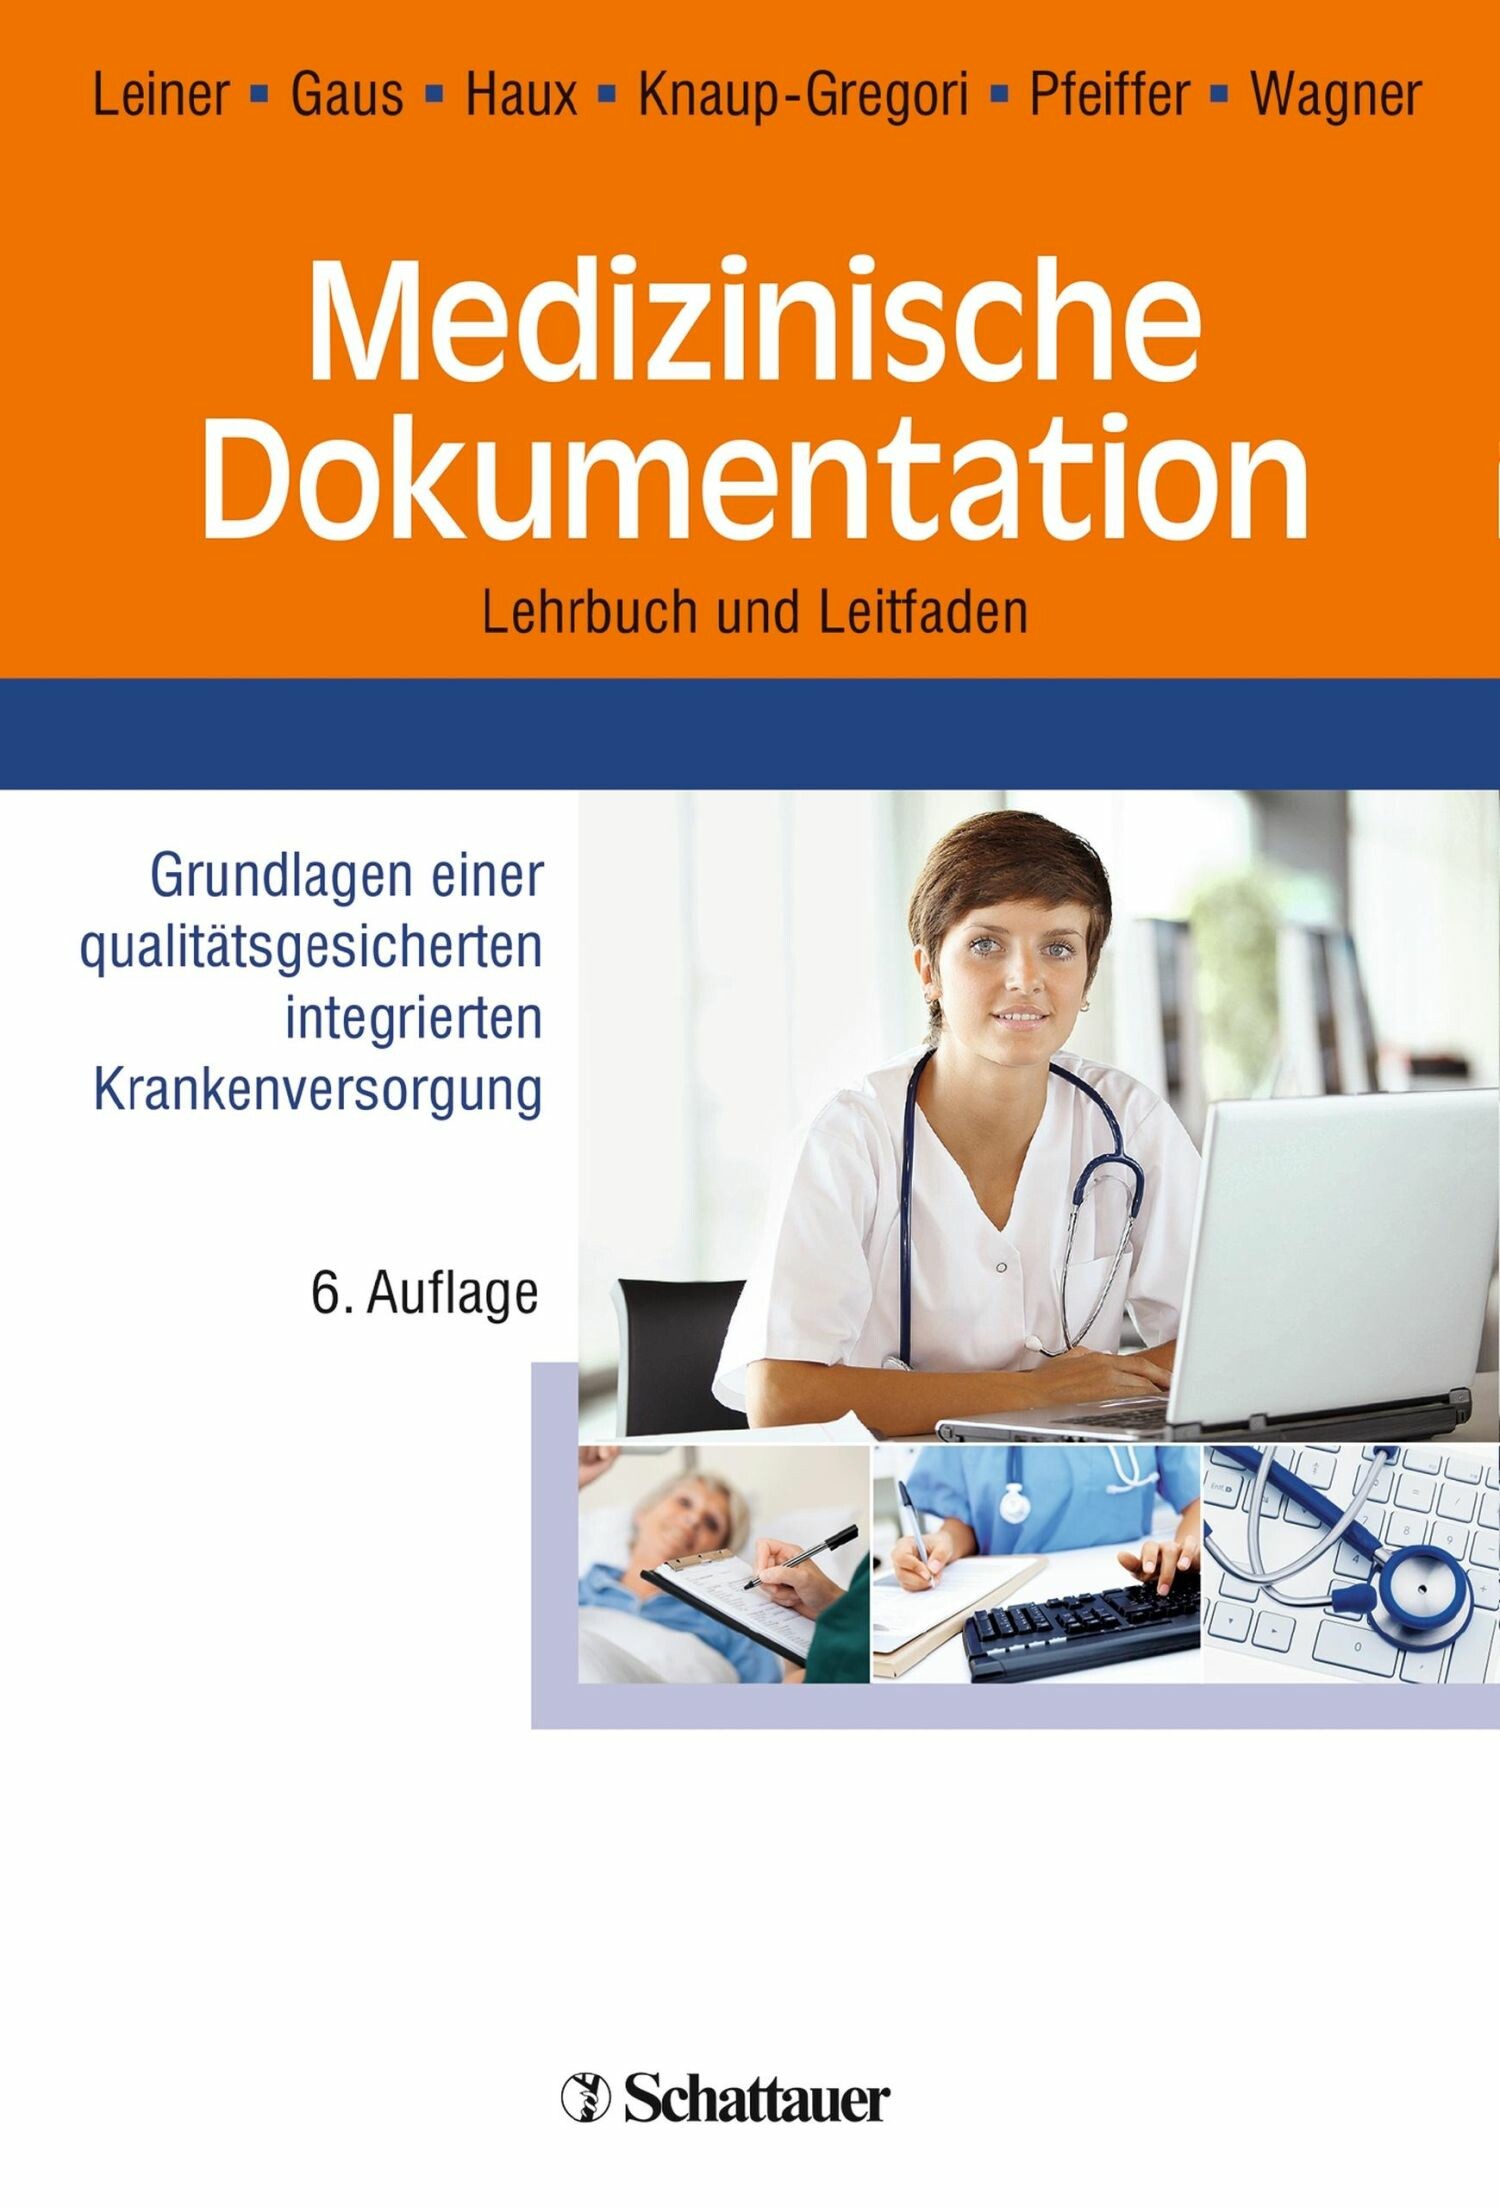 Medizinische Dokumentation  PDF eBook kaufen  Ebooks Grundlagen